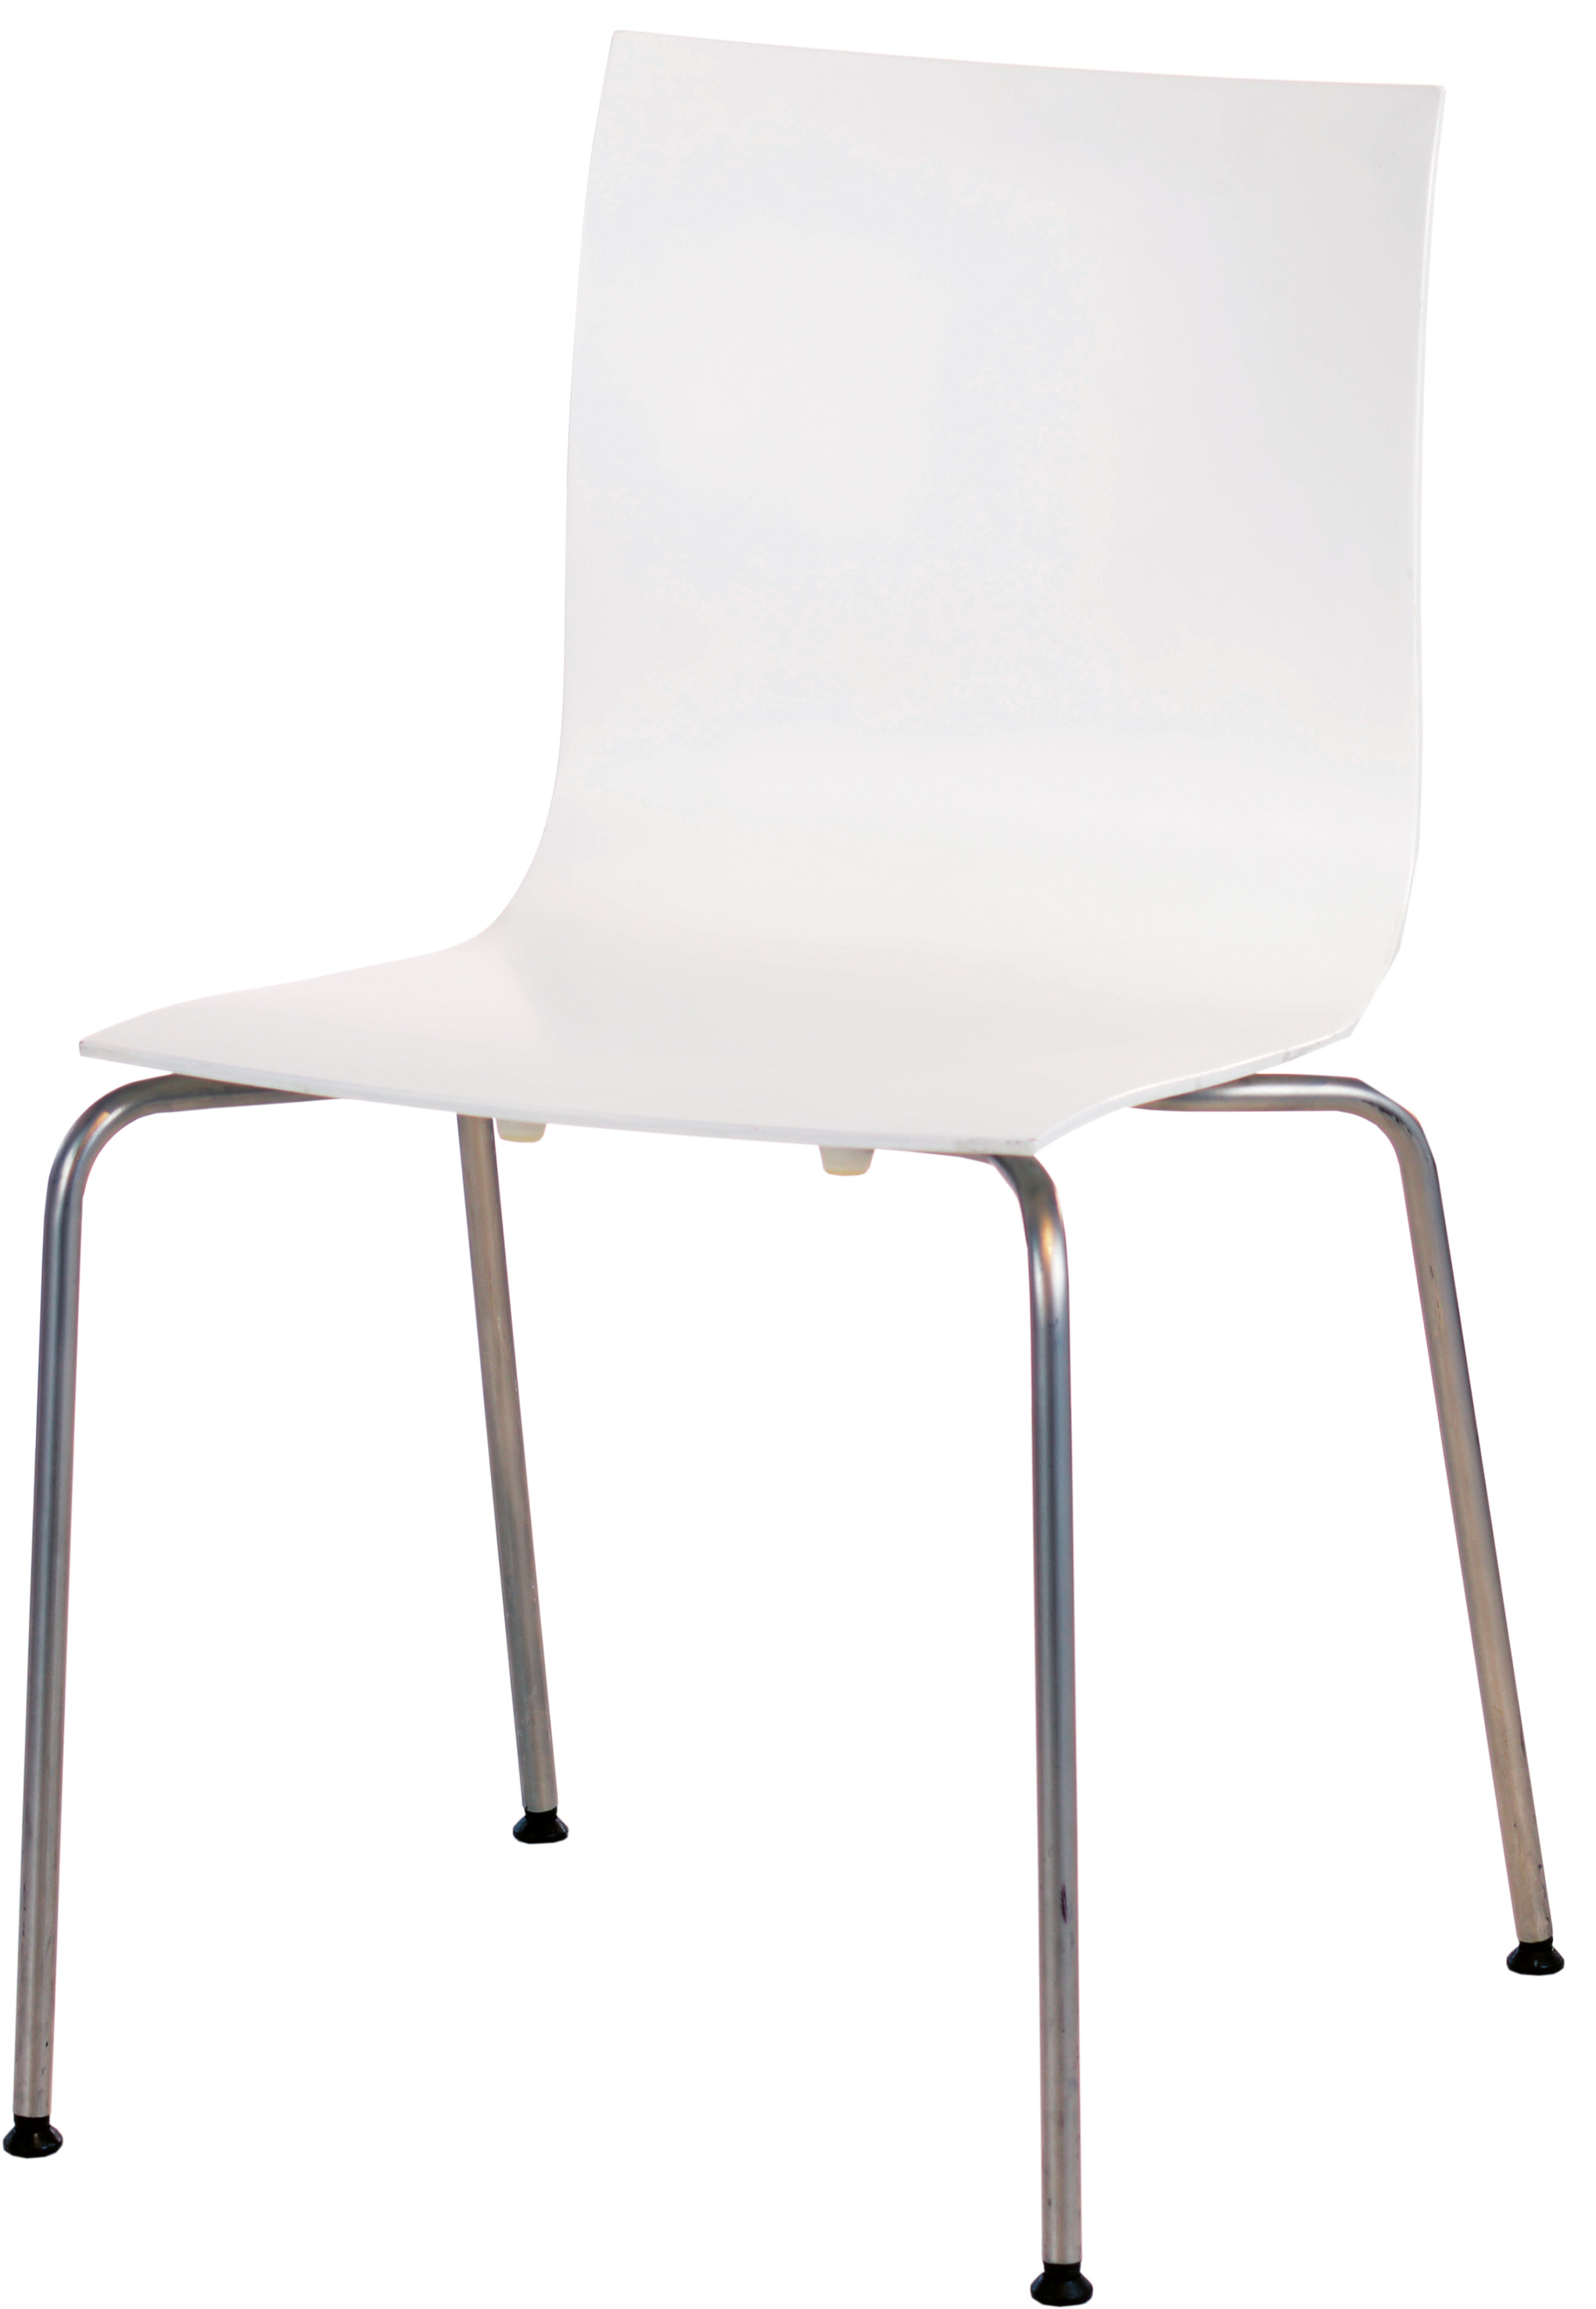 Lapalma THIN S16 Designer-Stuhl, Holzstuhl ("La Palma"), Bankettstuhl, elegant, Holz, nussbaum / weiß - geformte Eleganz - MEGA-reduziert!